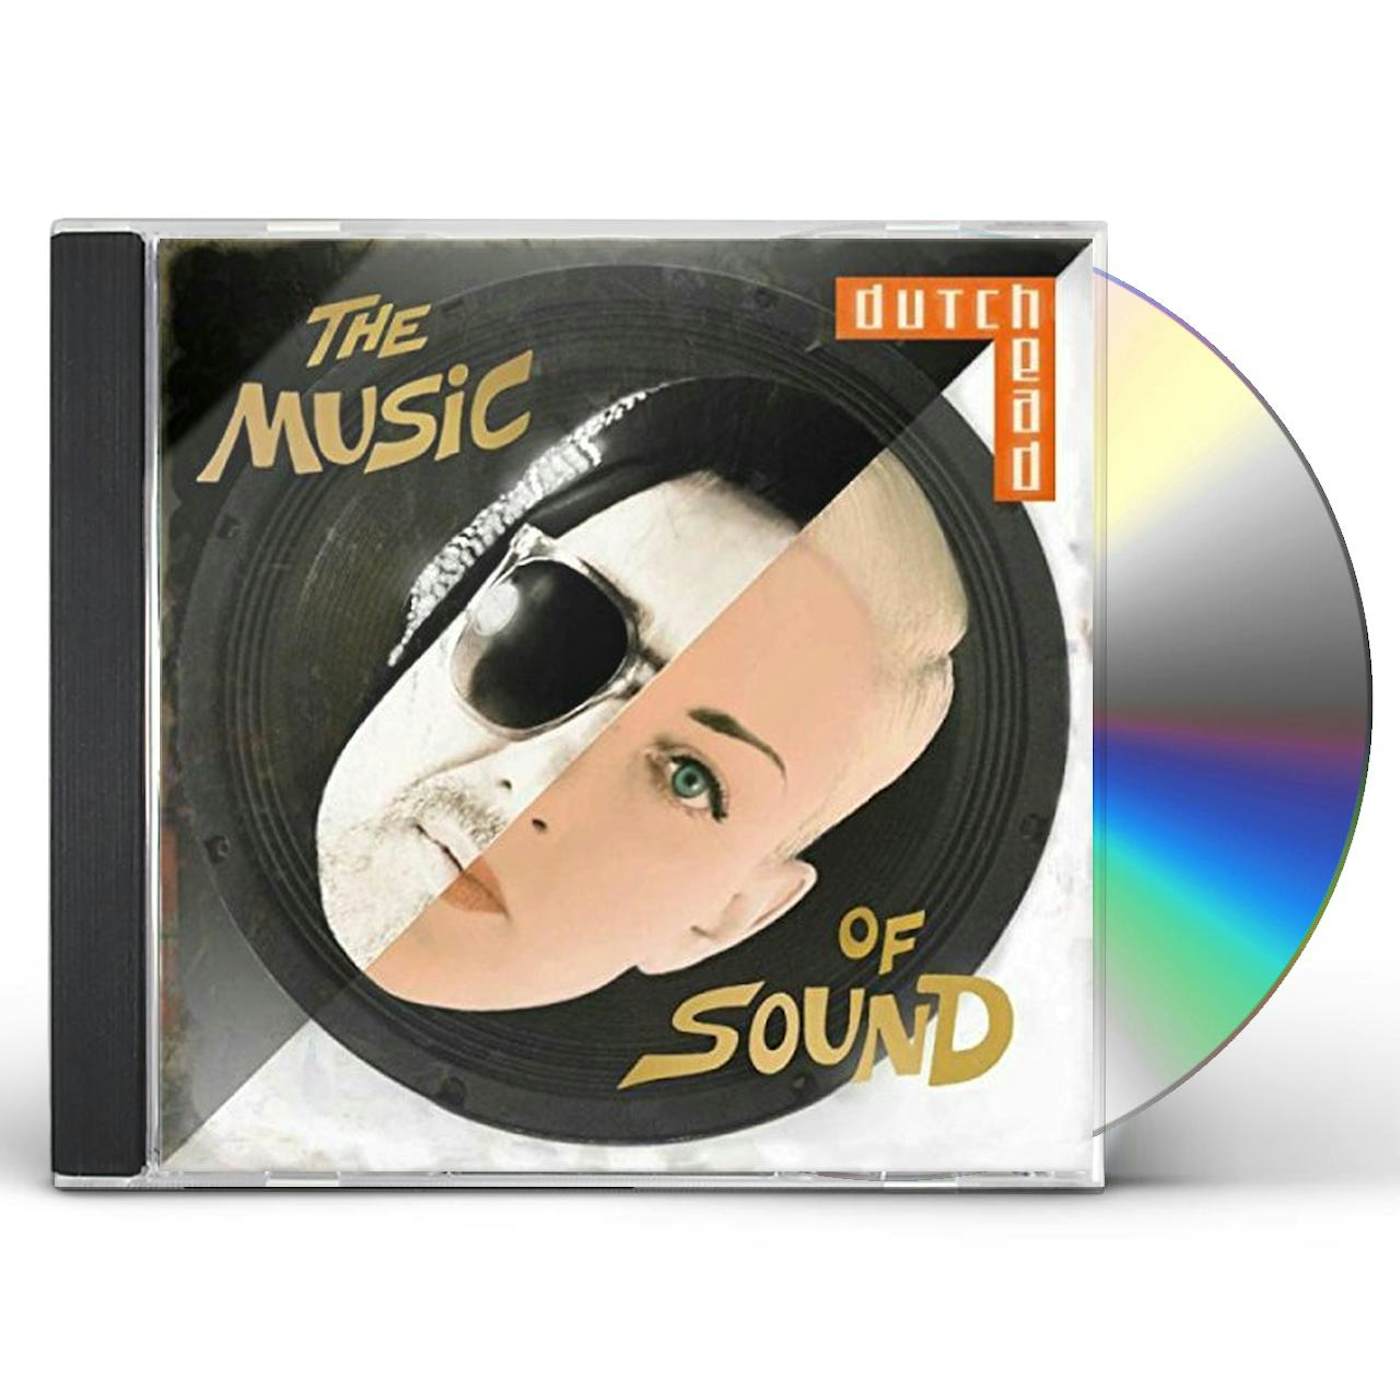 Dutch Head MUSIC OF SOUND CD